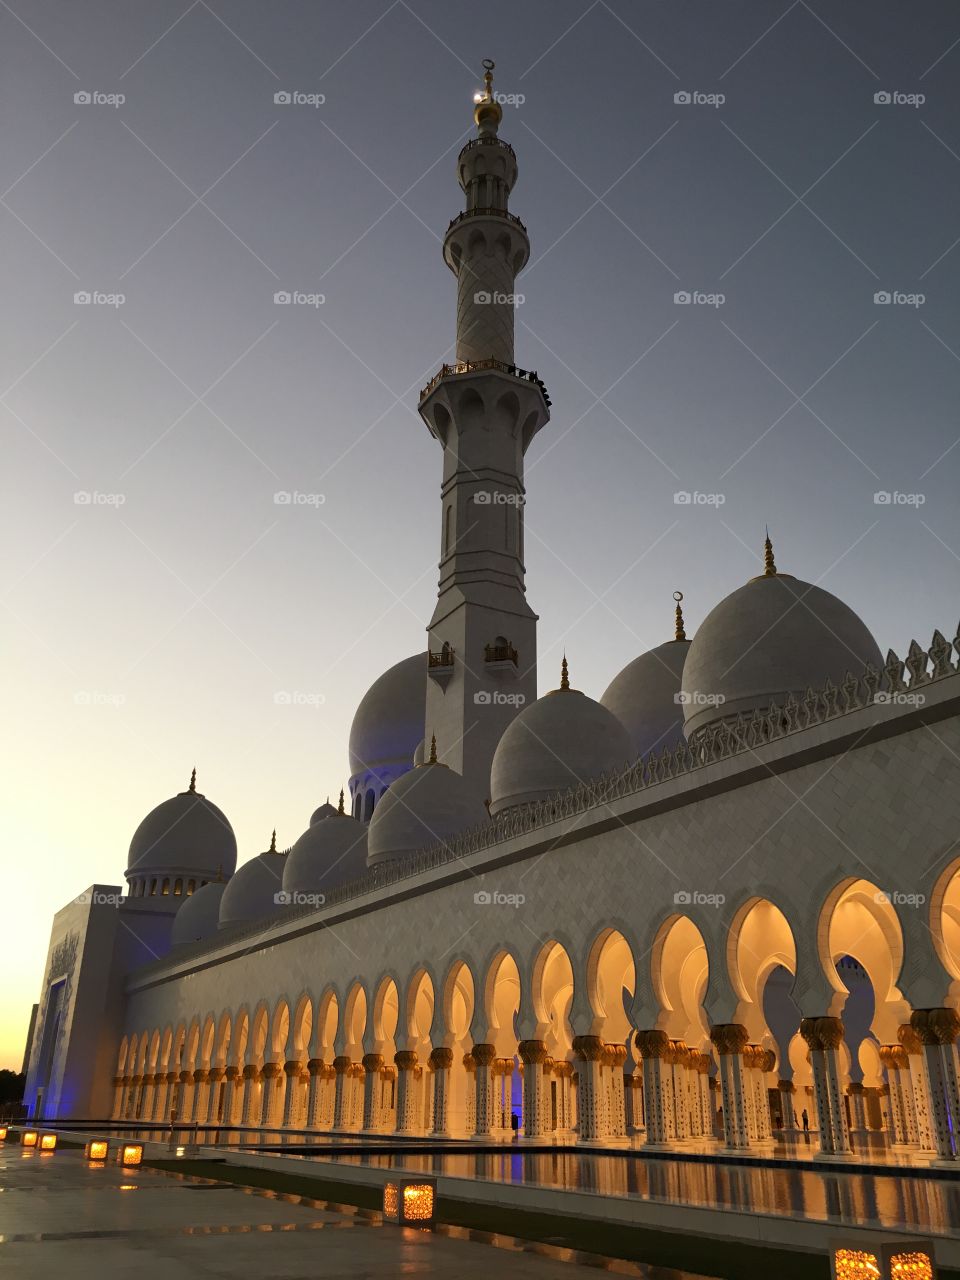 Sheikh Zayed Grand Mosque in Abu Dhabi, UAE, at dusk.